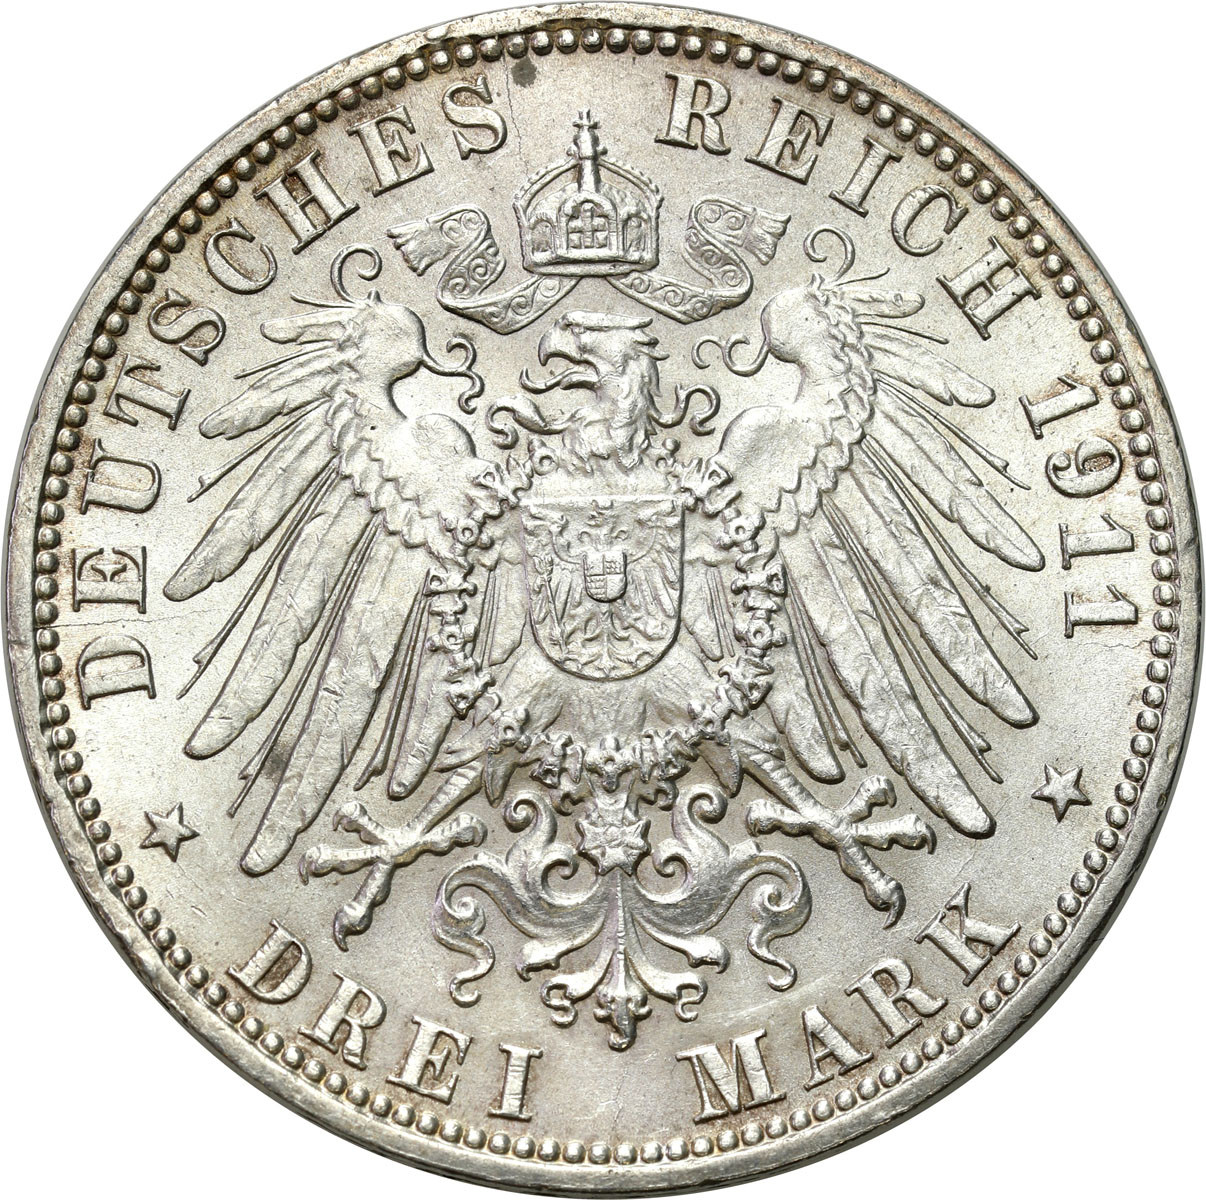 Niemcy, Hamburg. 3 marki 1911